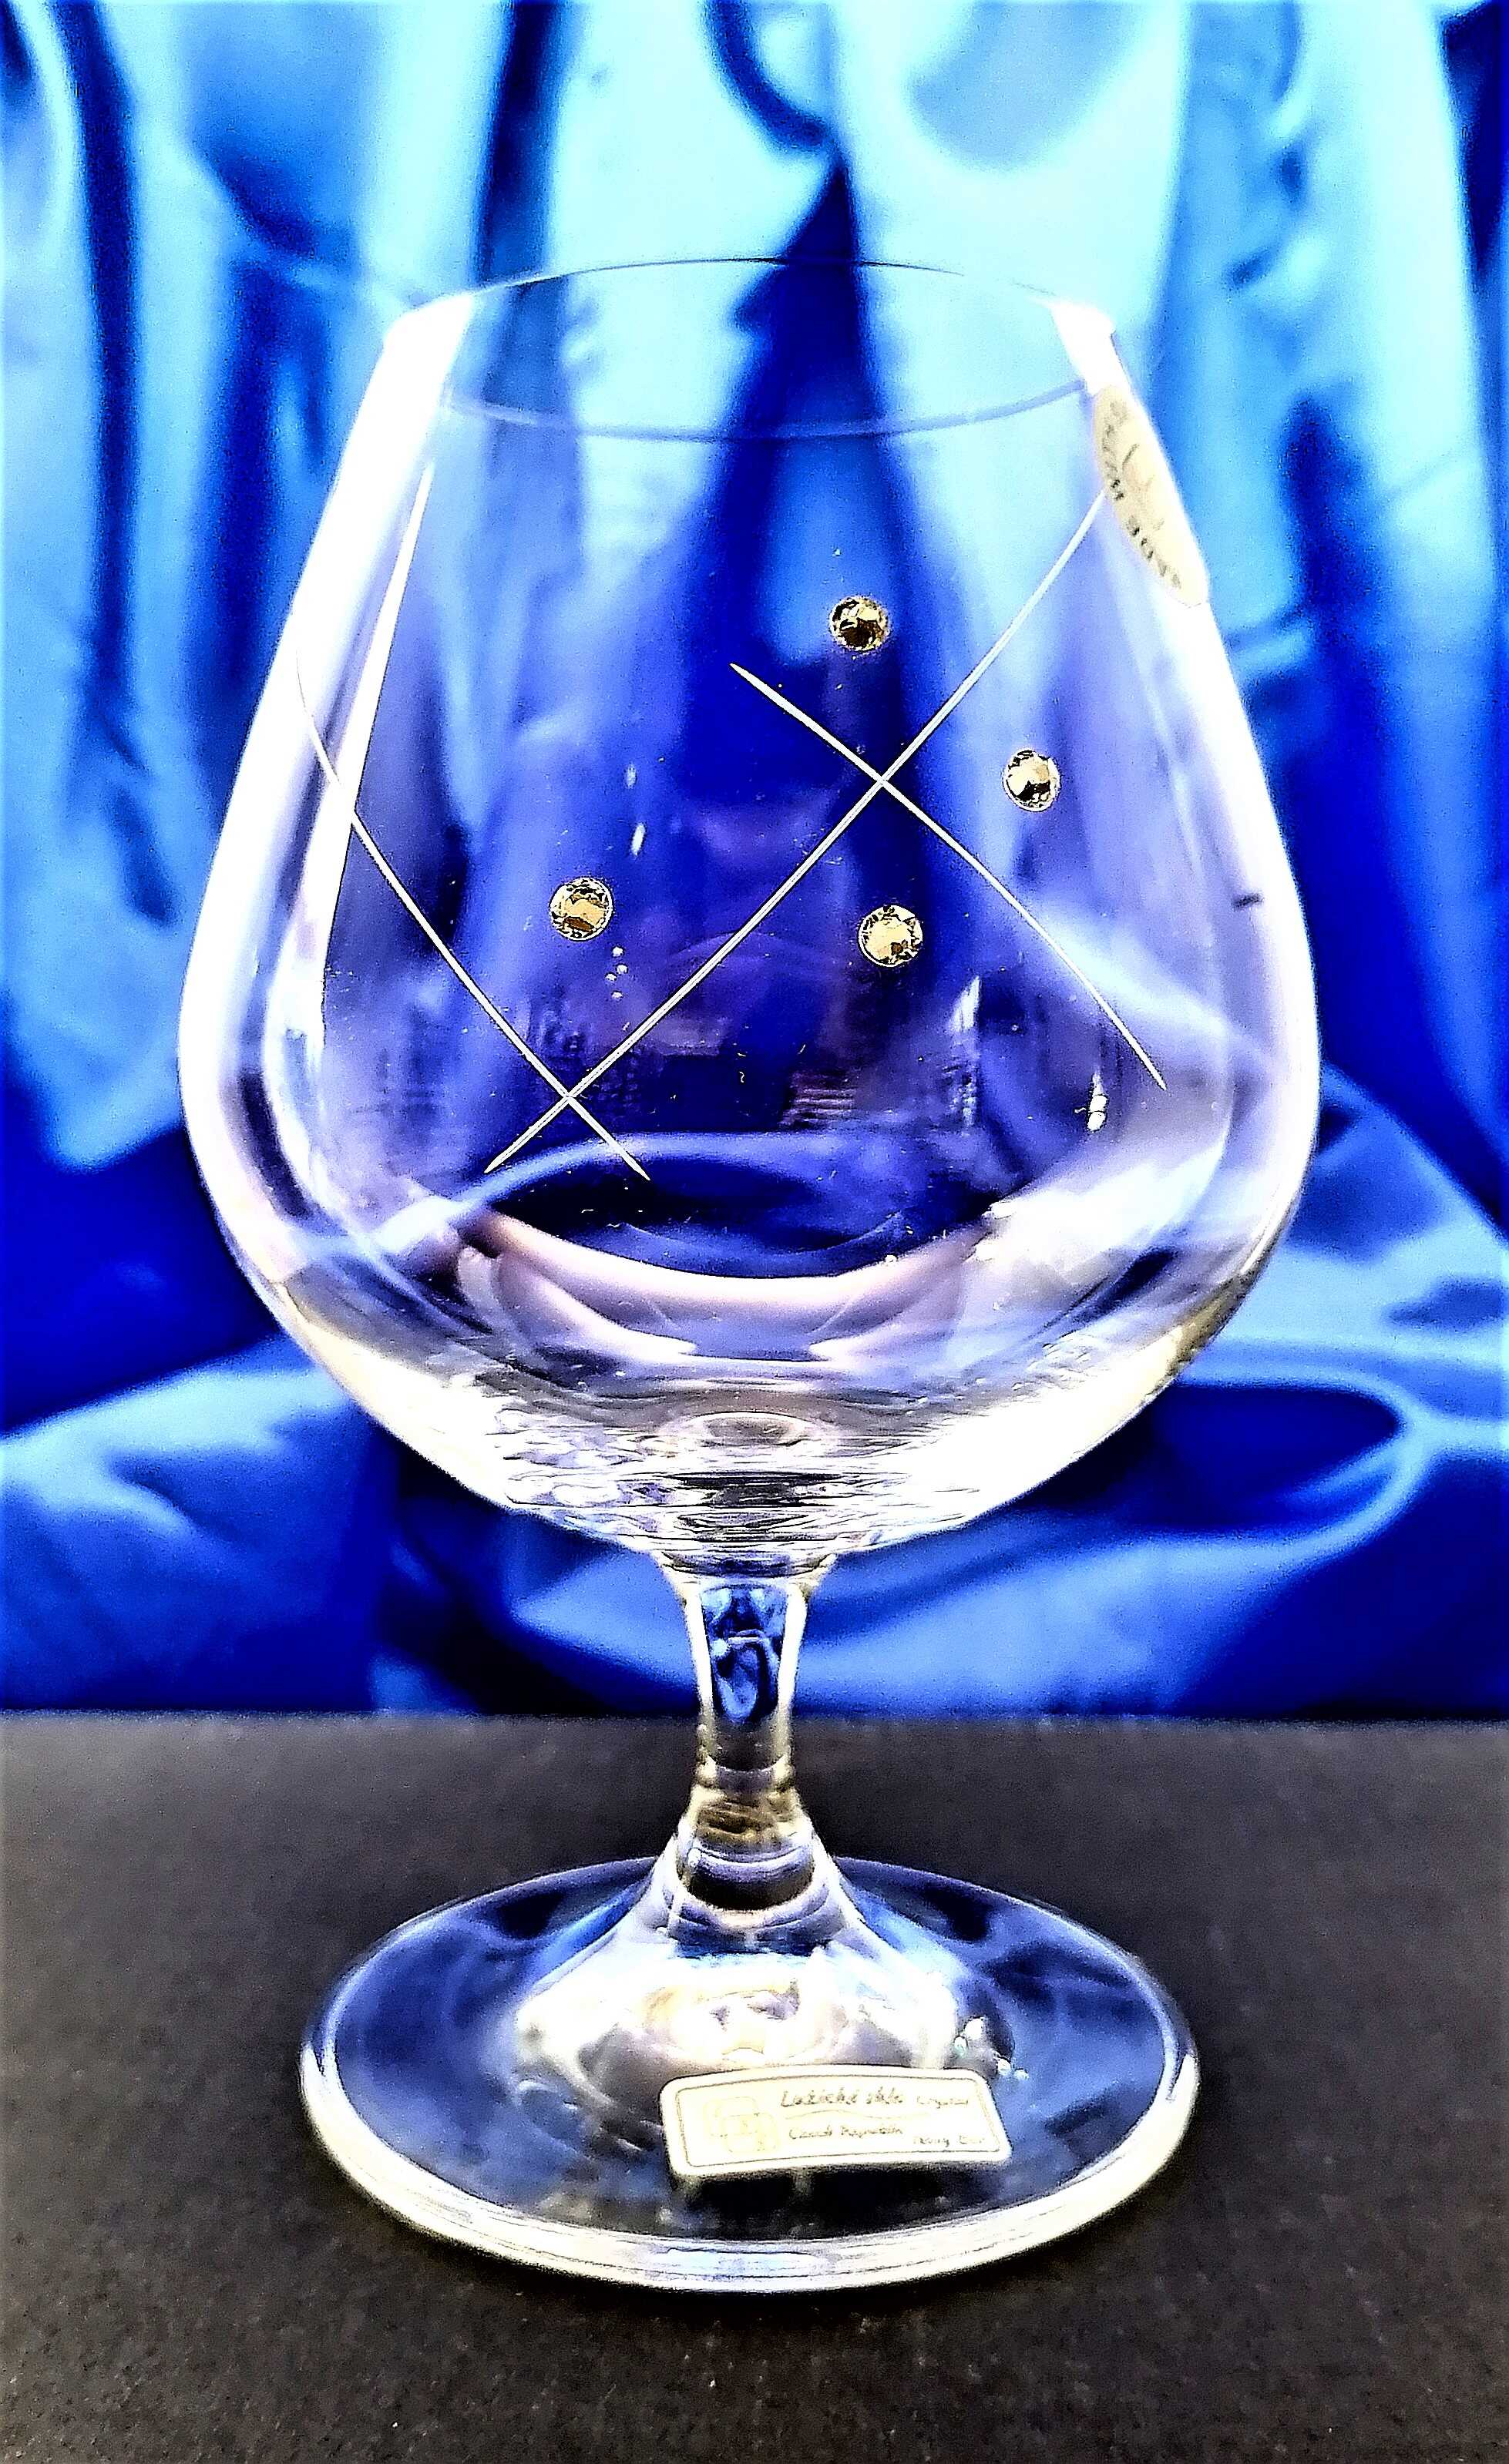 LsG-Crystal Skleničky na koňak 24 x krystaly Swarovski ručně broušené vzor Karla dárkové balení satén J-328 400 ml 6 Ks.